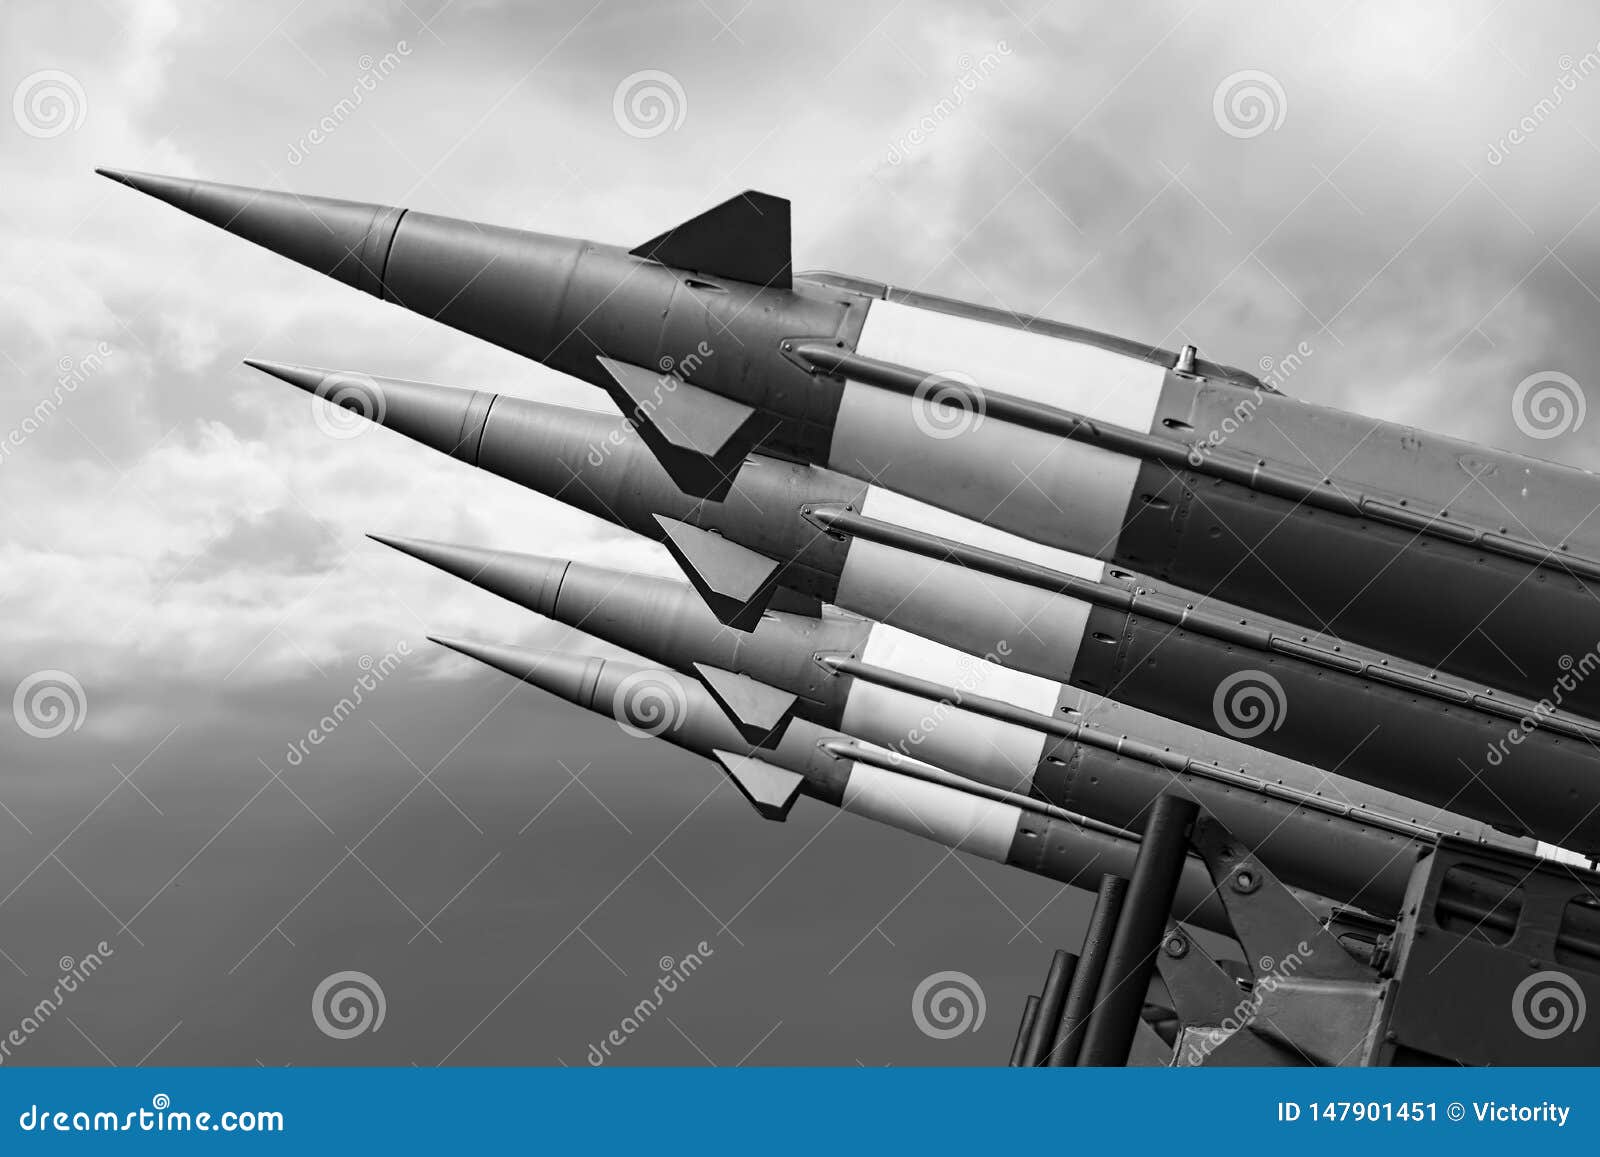 nuclear missiles with warhead aimed at gloomy sky